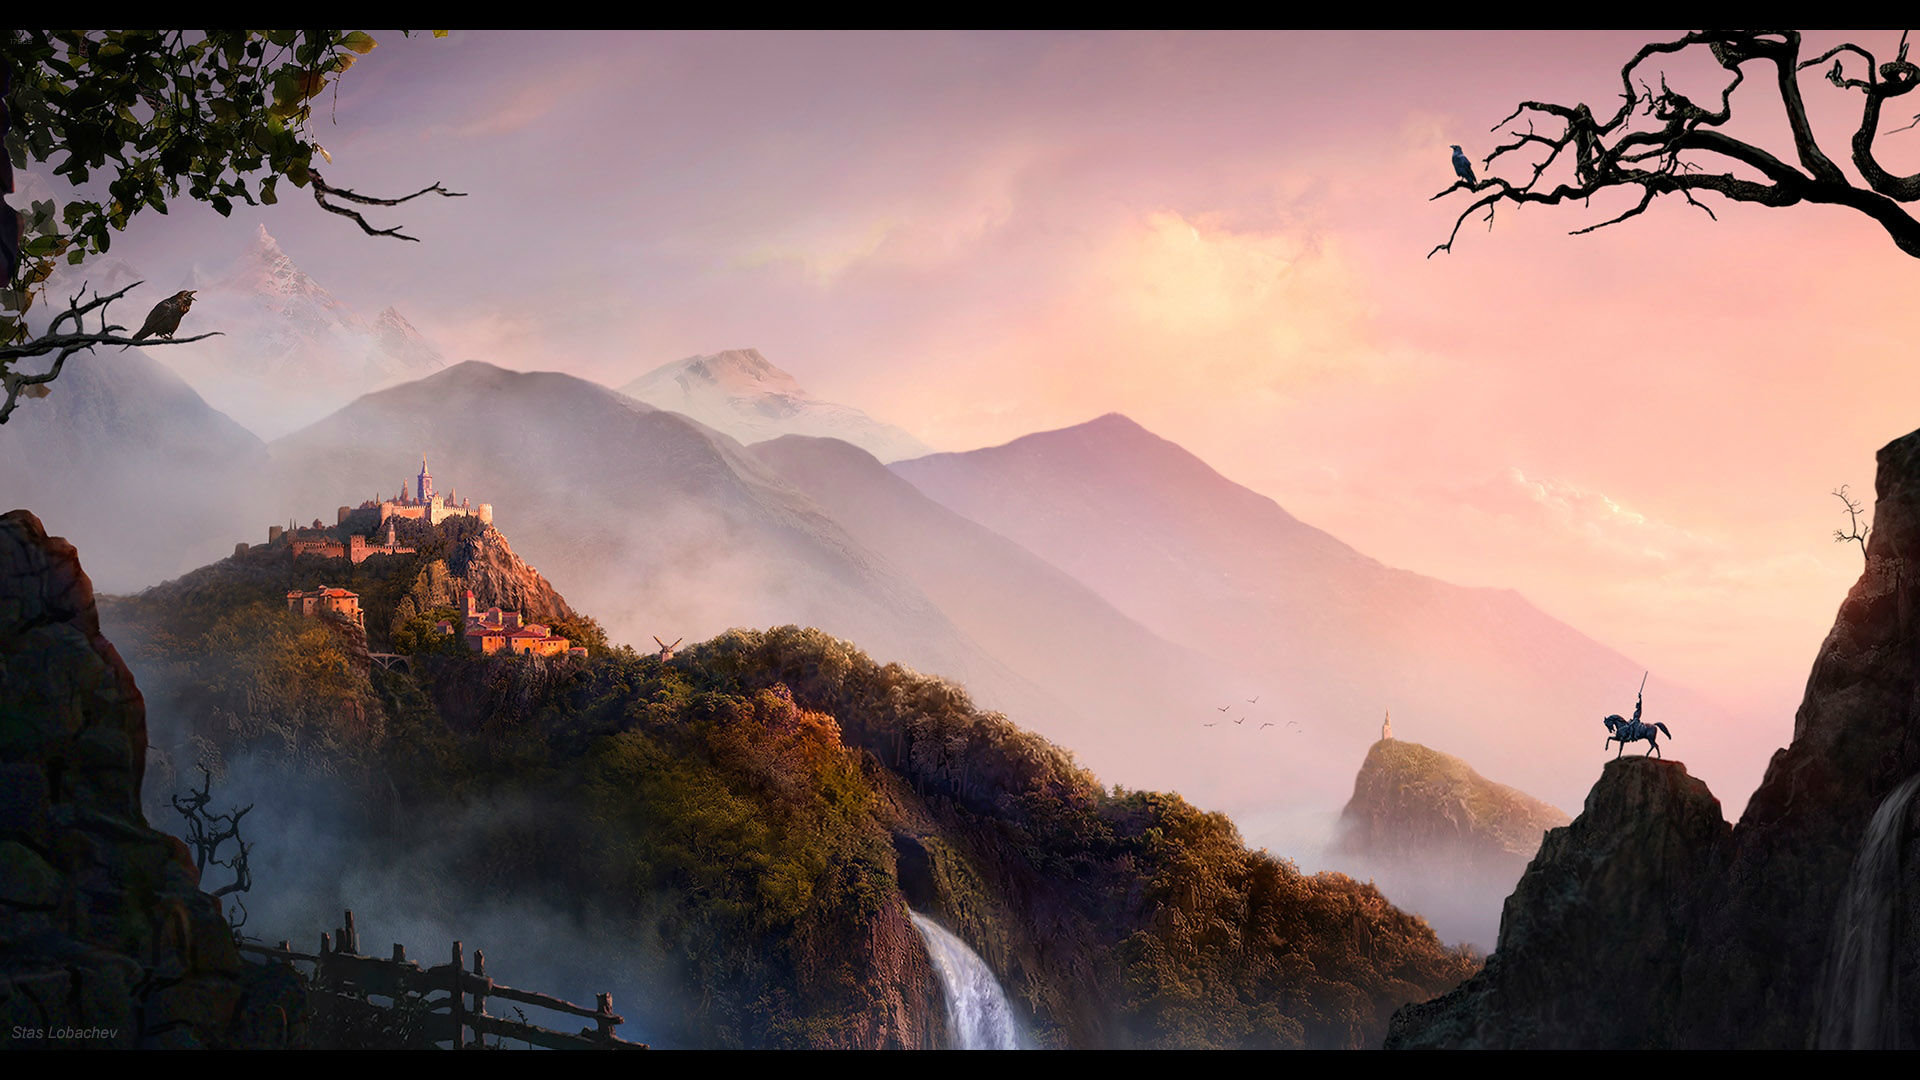 Fantasy landscape wallpapers 1920x1080 Full HD (1080p) desktop backgrounds